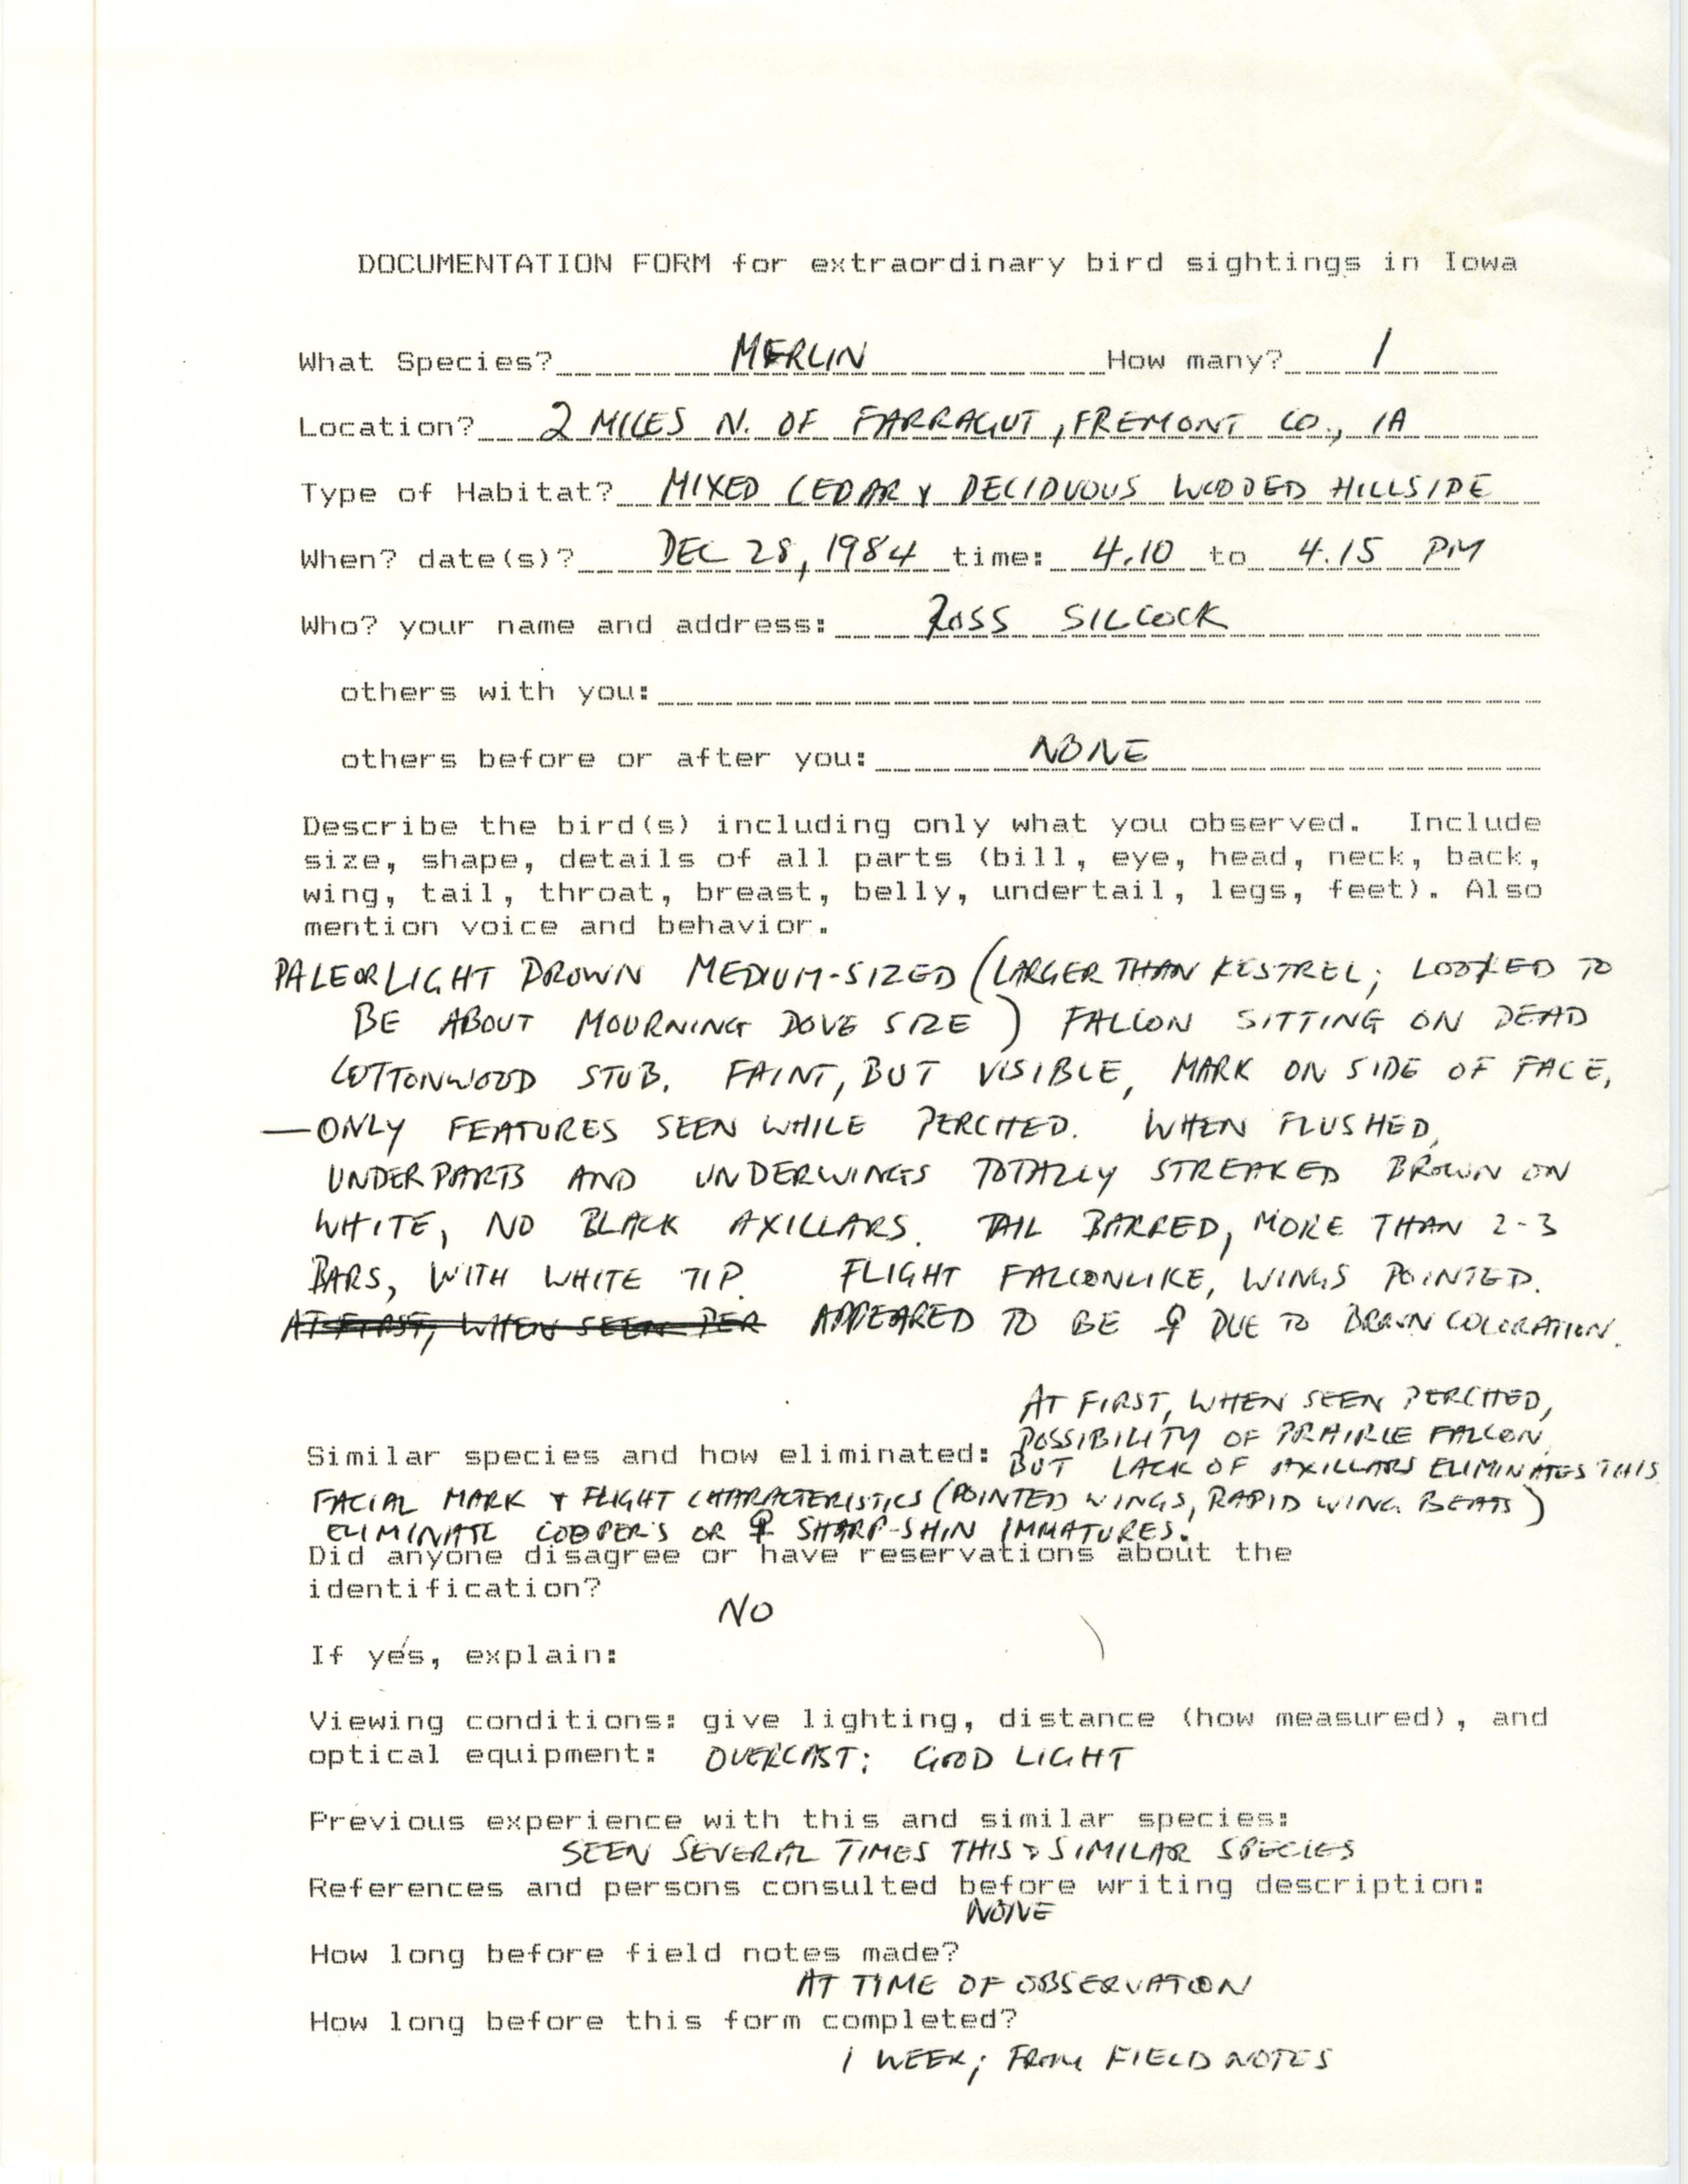 Rare bird documentation form for Merlin at Farragut, 1984